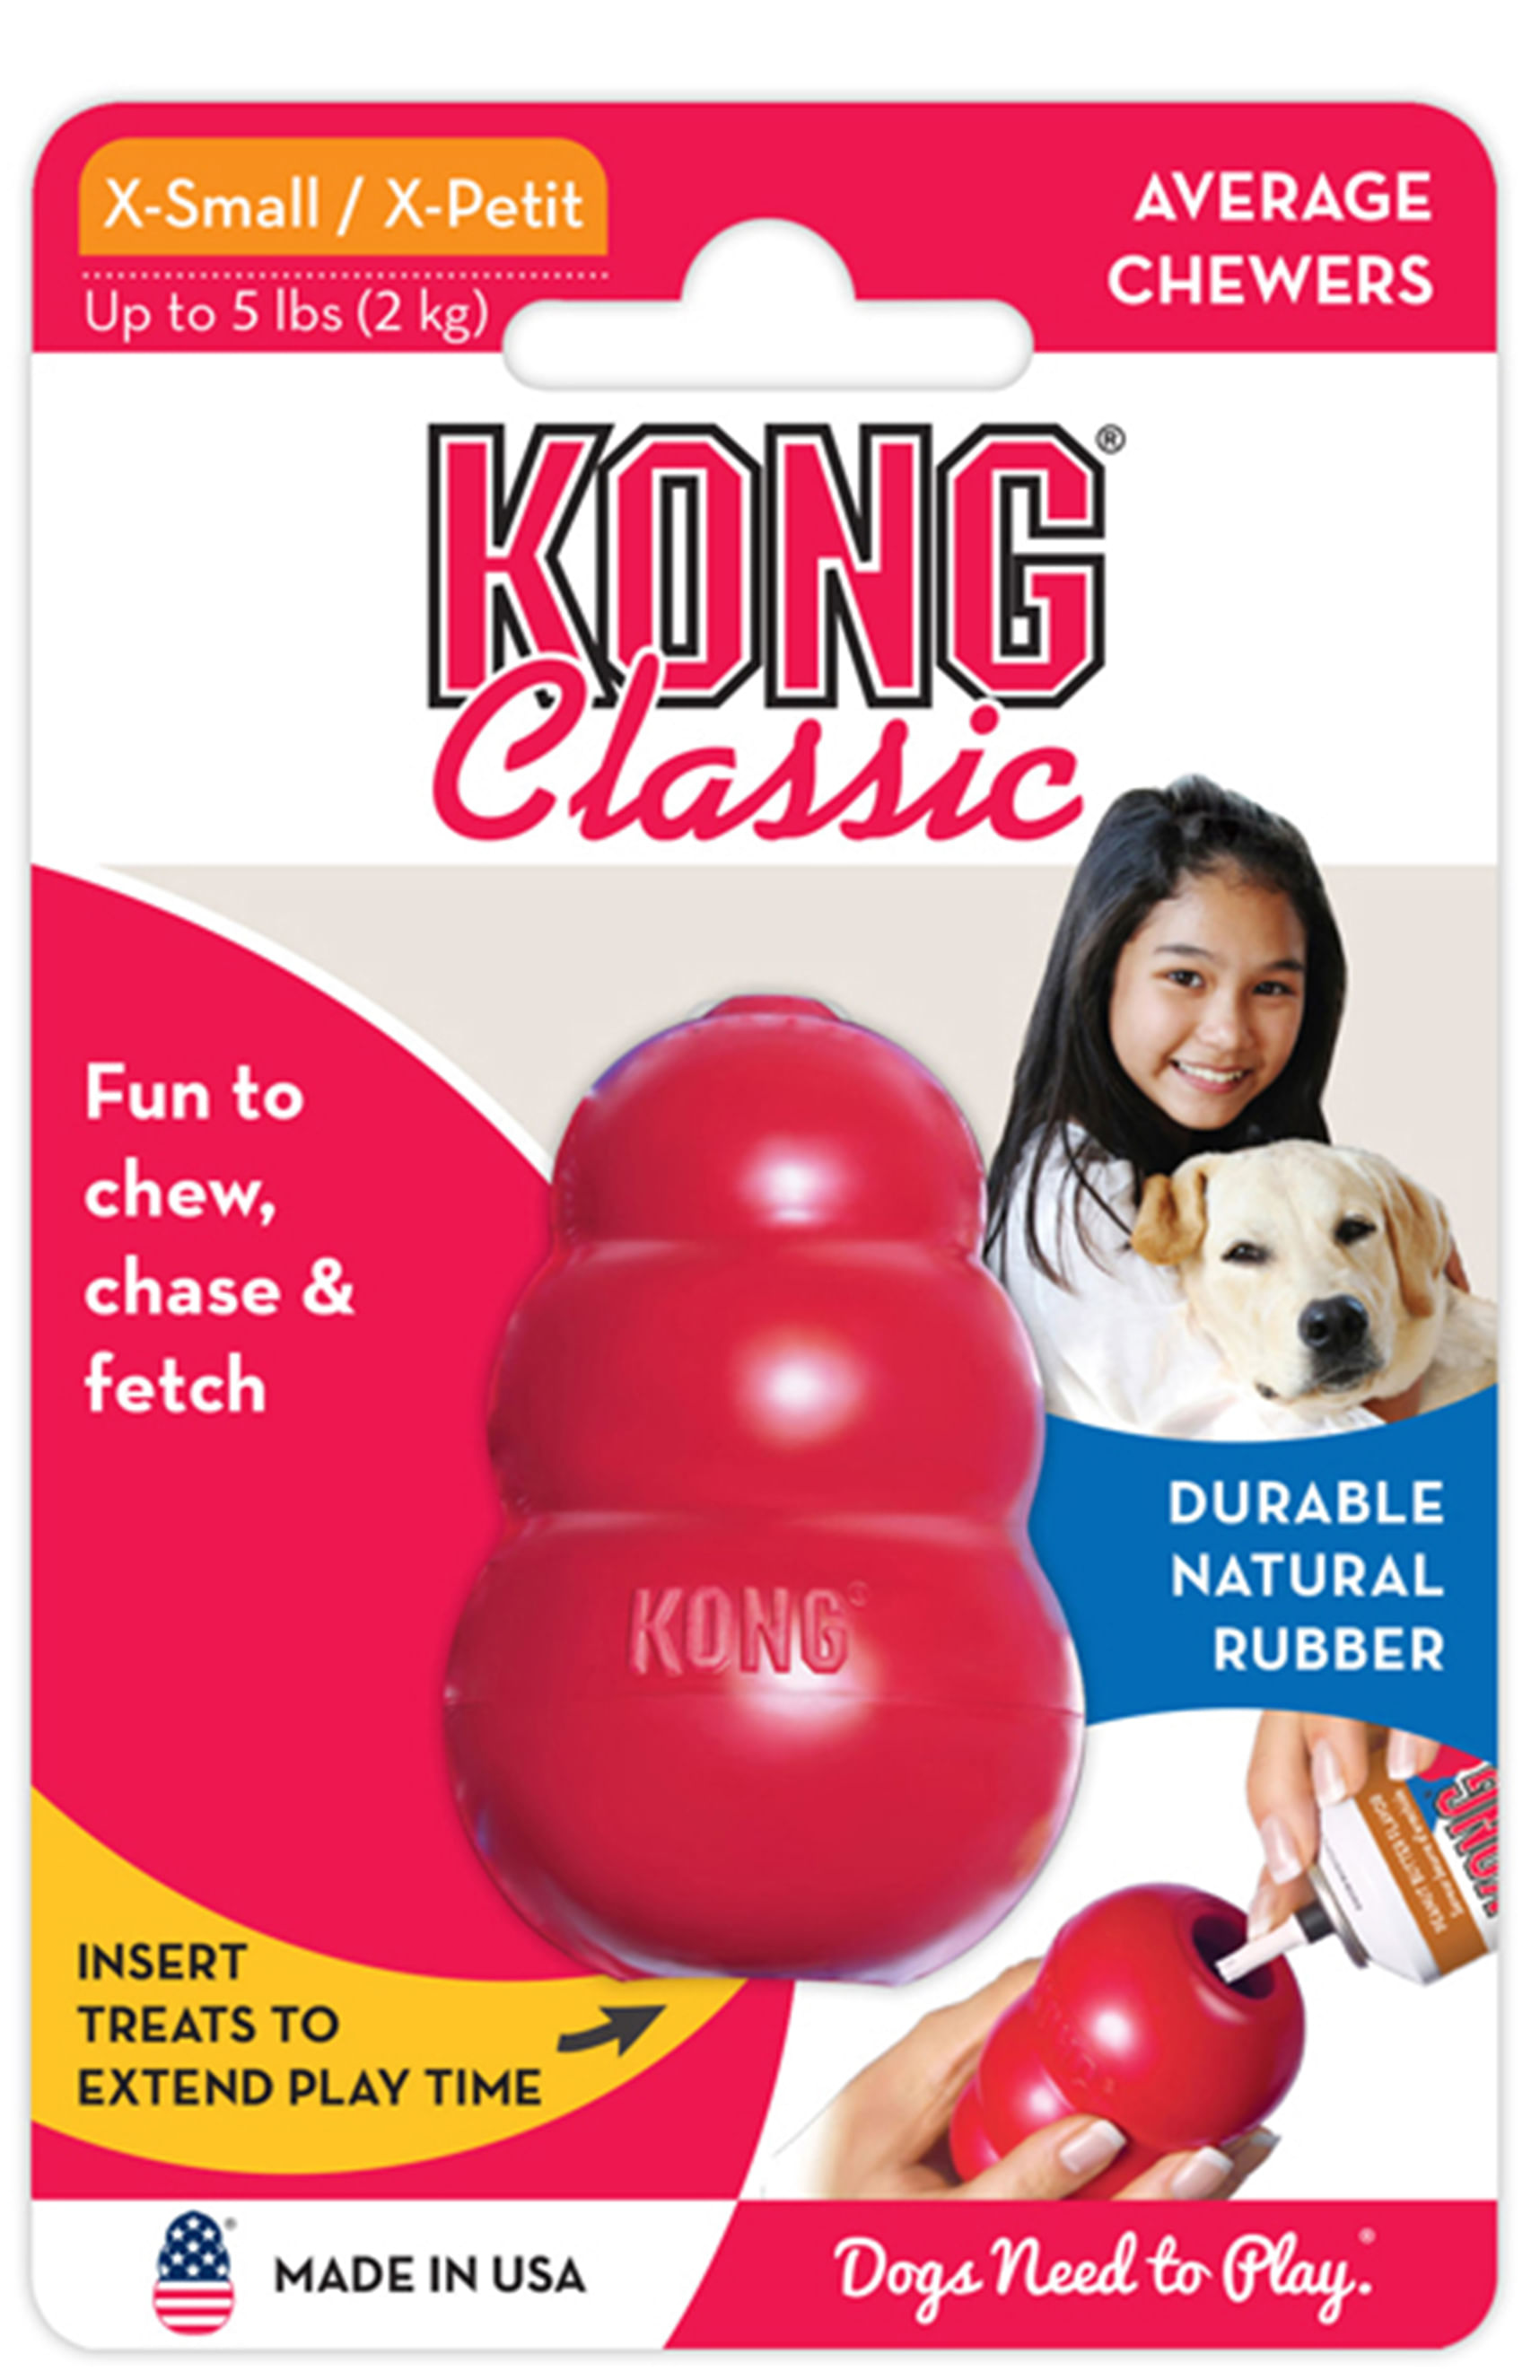 KONG Classic Dog Toy, Medium